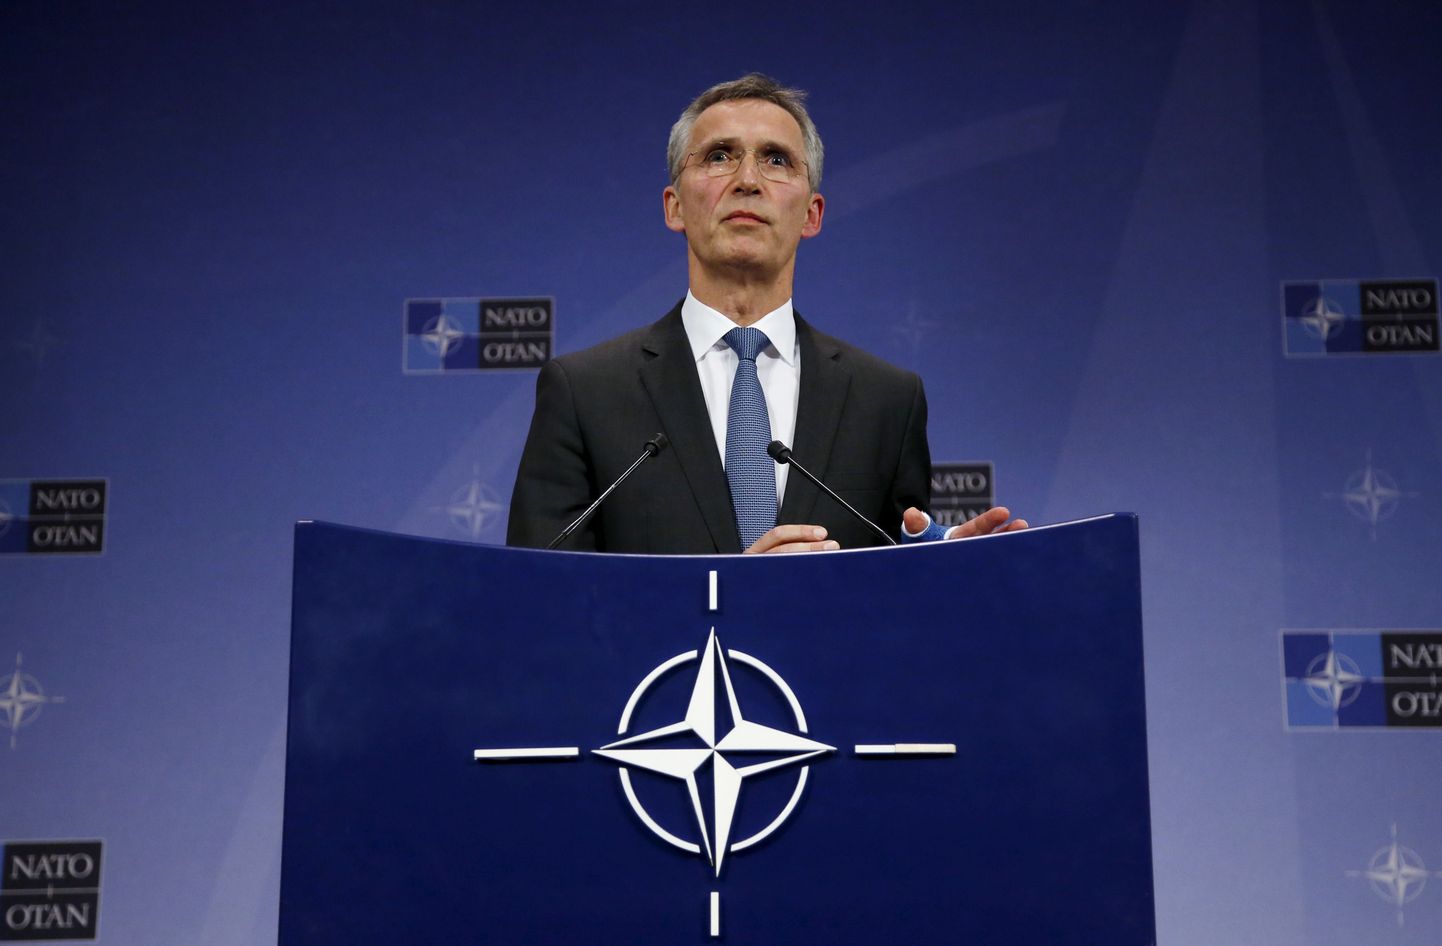 NATO peasekretär Jens Stoltenberg,